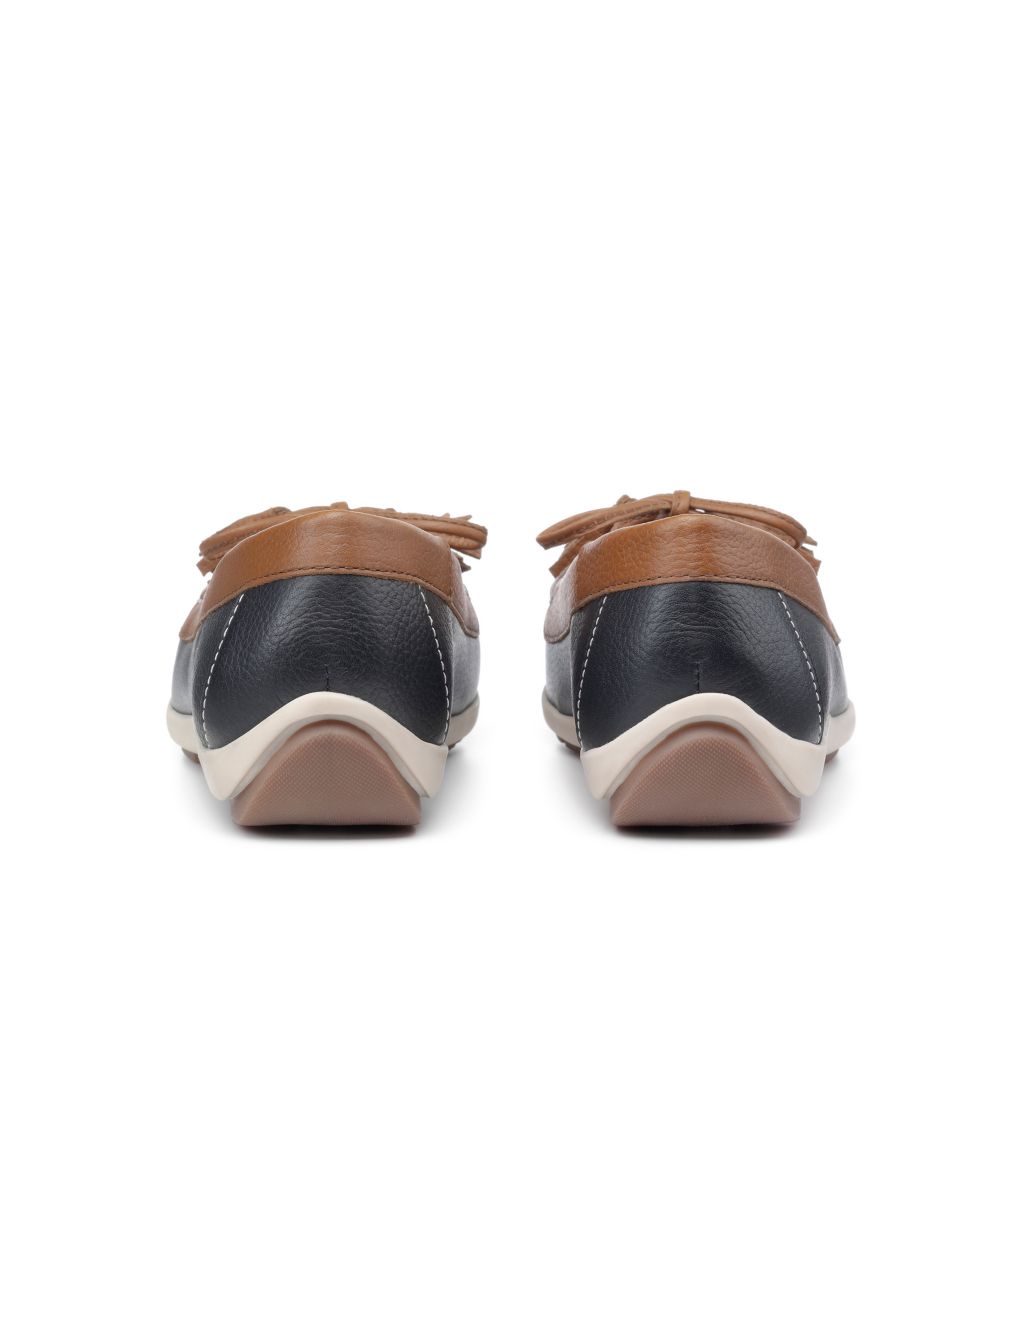 Leather Tassel Flat Loafers image 2